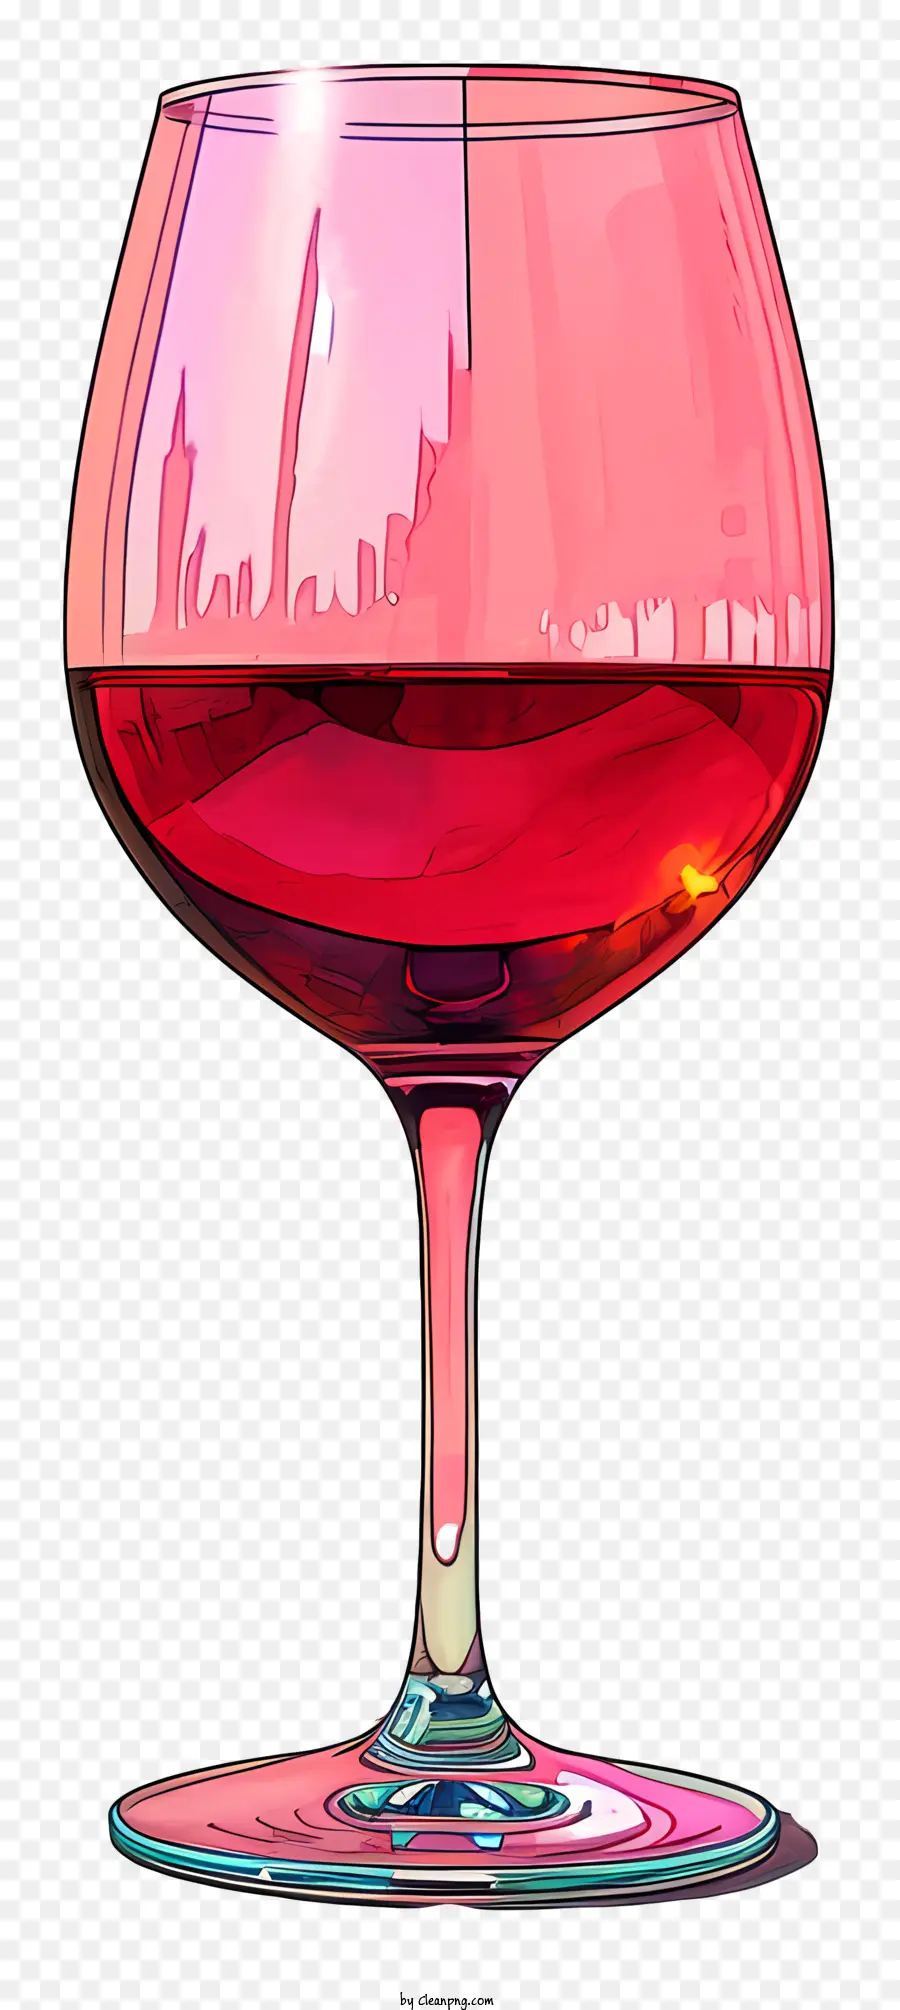 red wine glass pink liquid cloudy liquid shimmering liquid pink rimmed glass